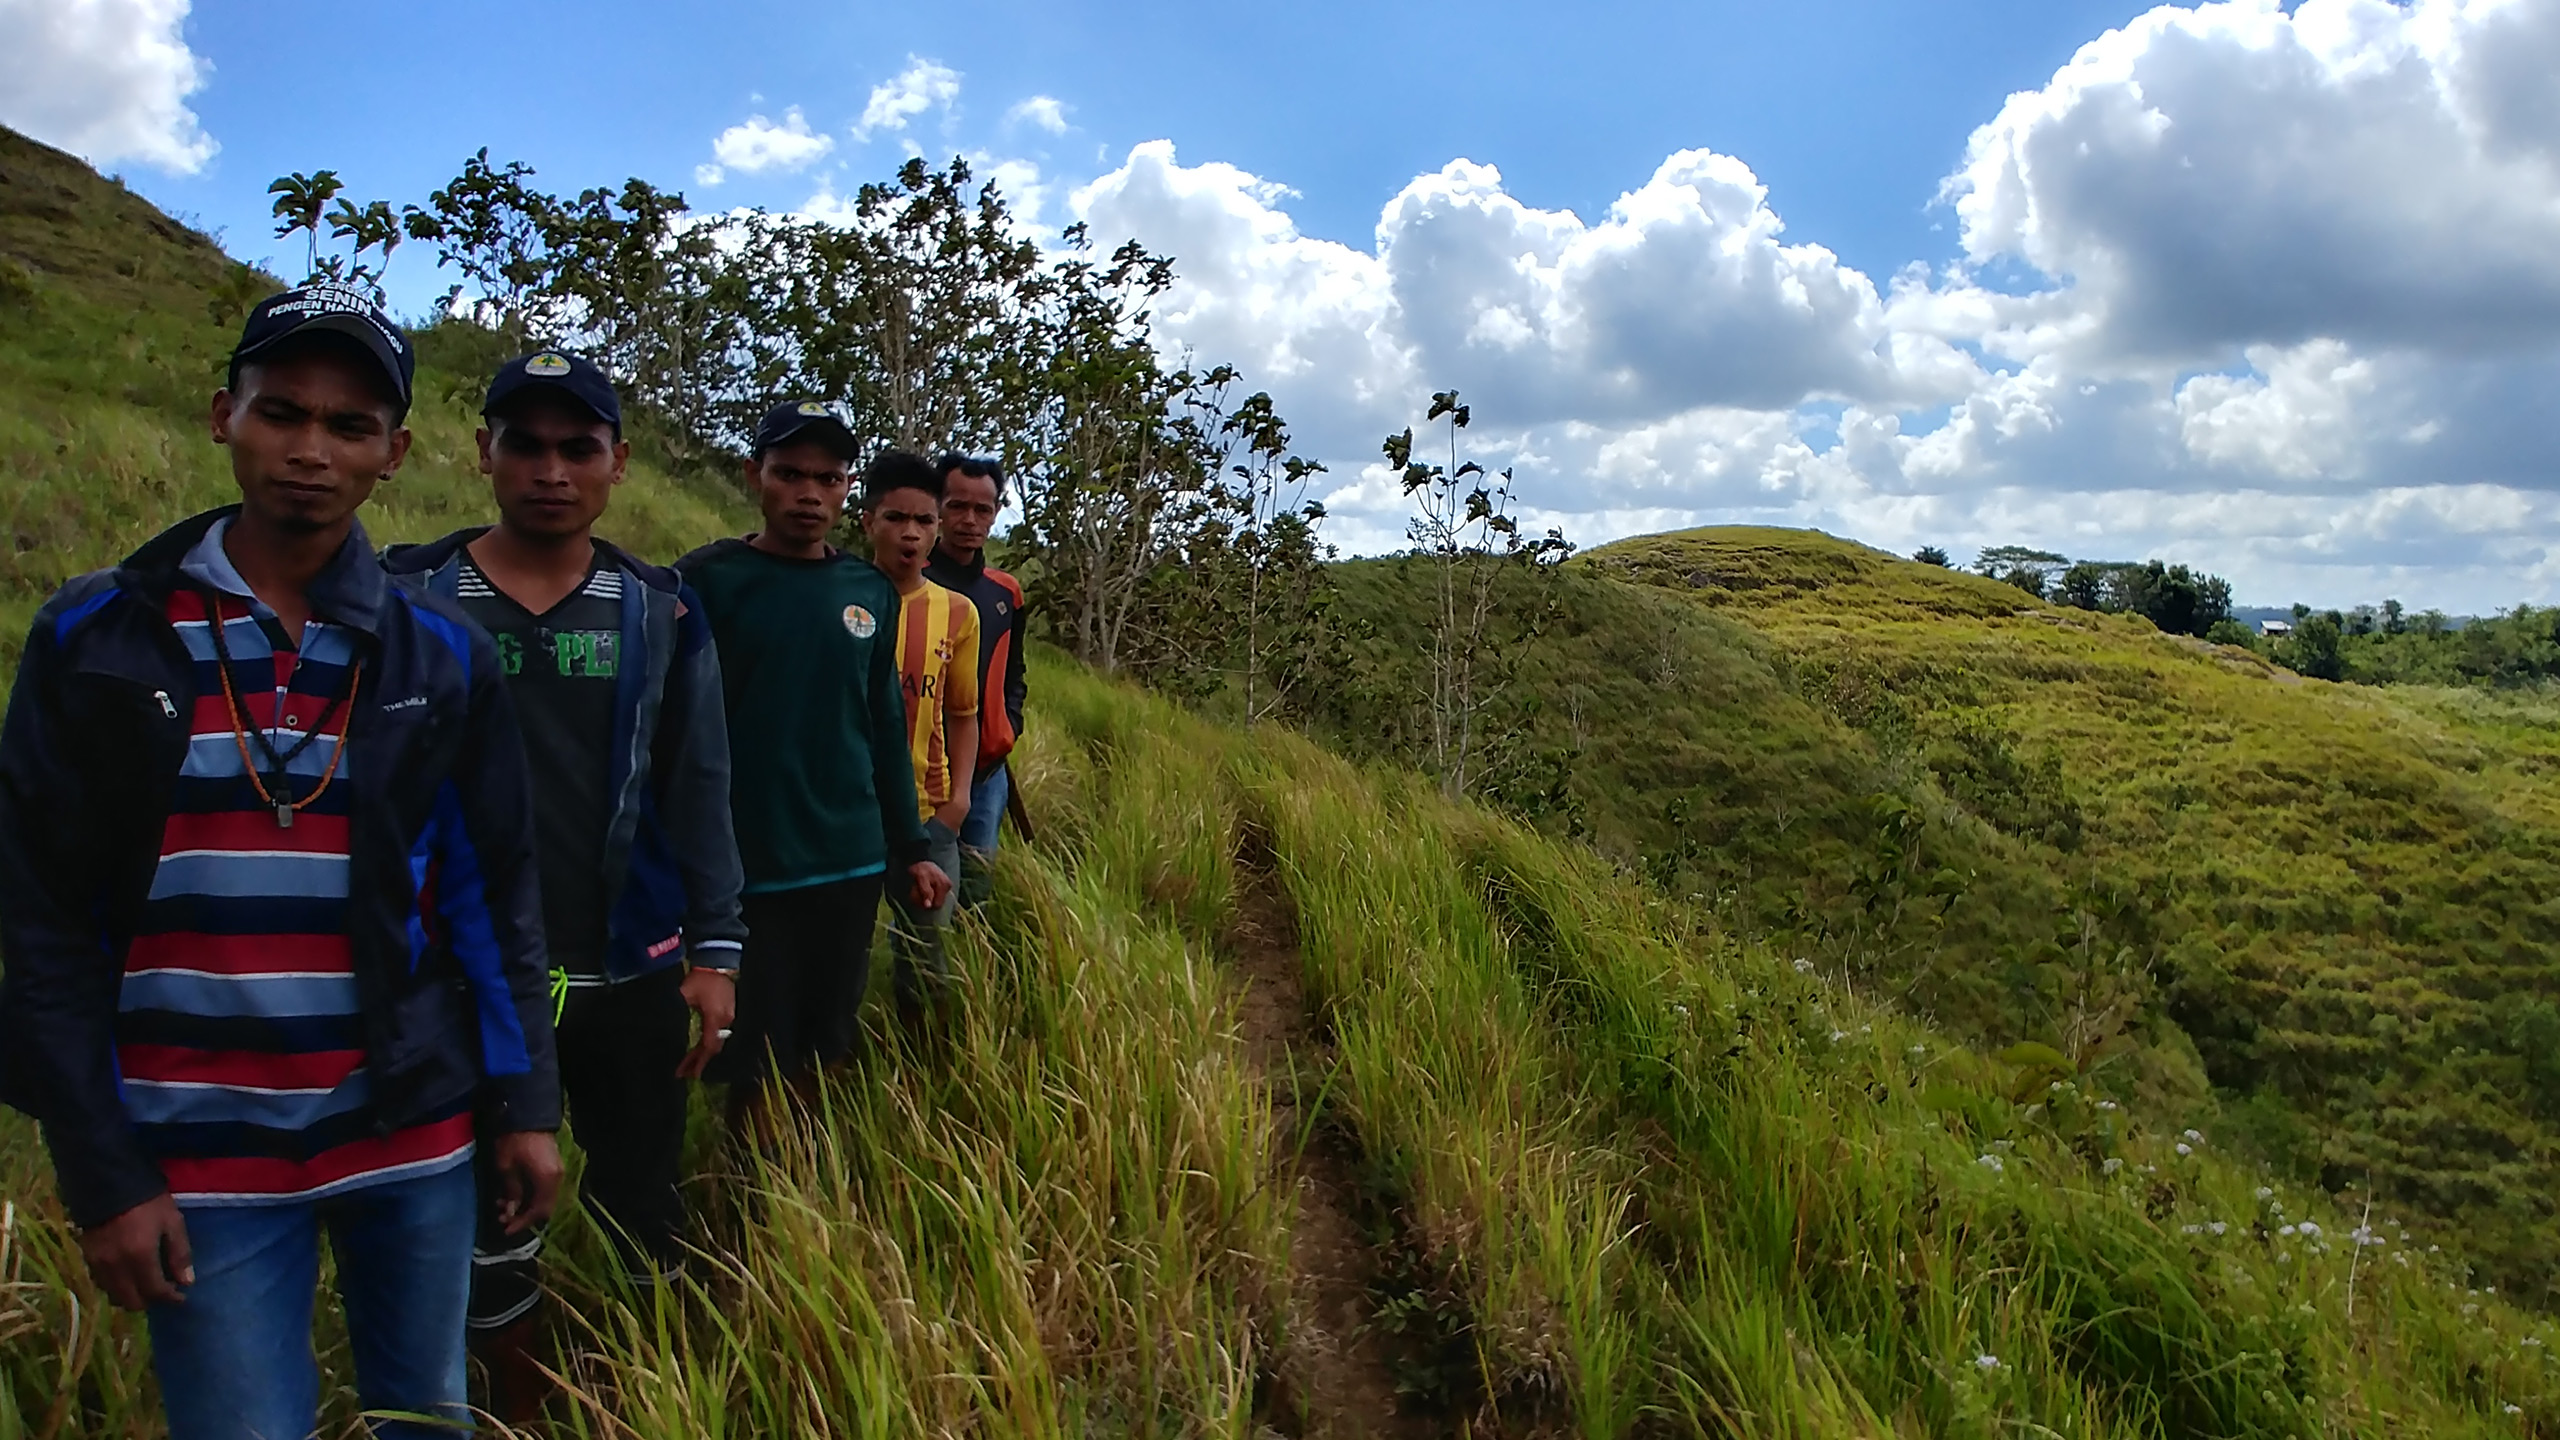 Field visit with volunteers in Sumba, Indonesia